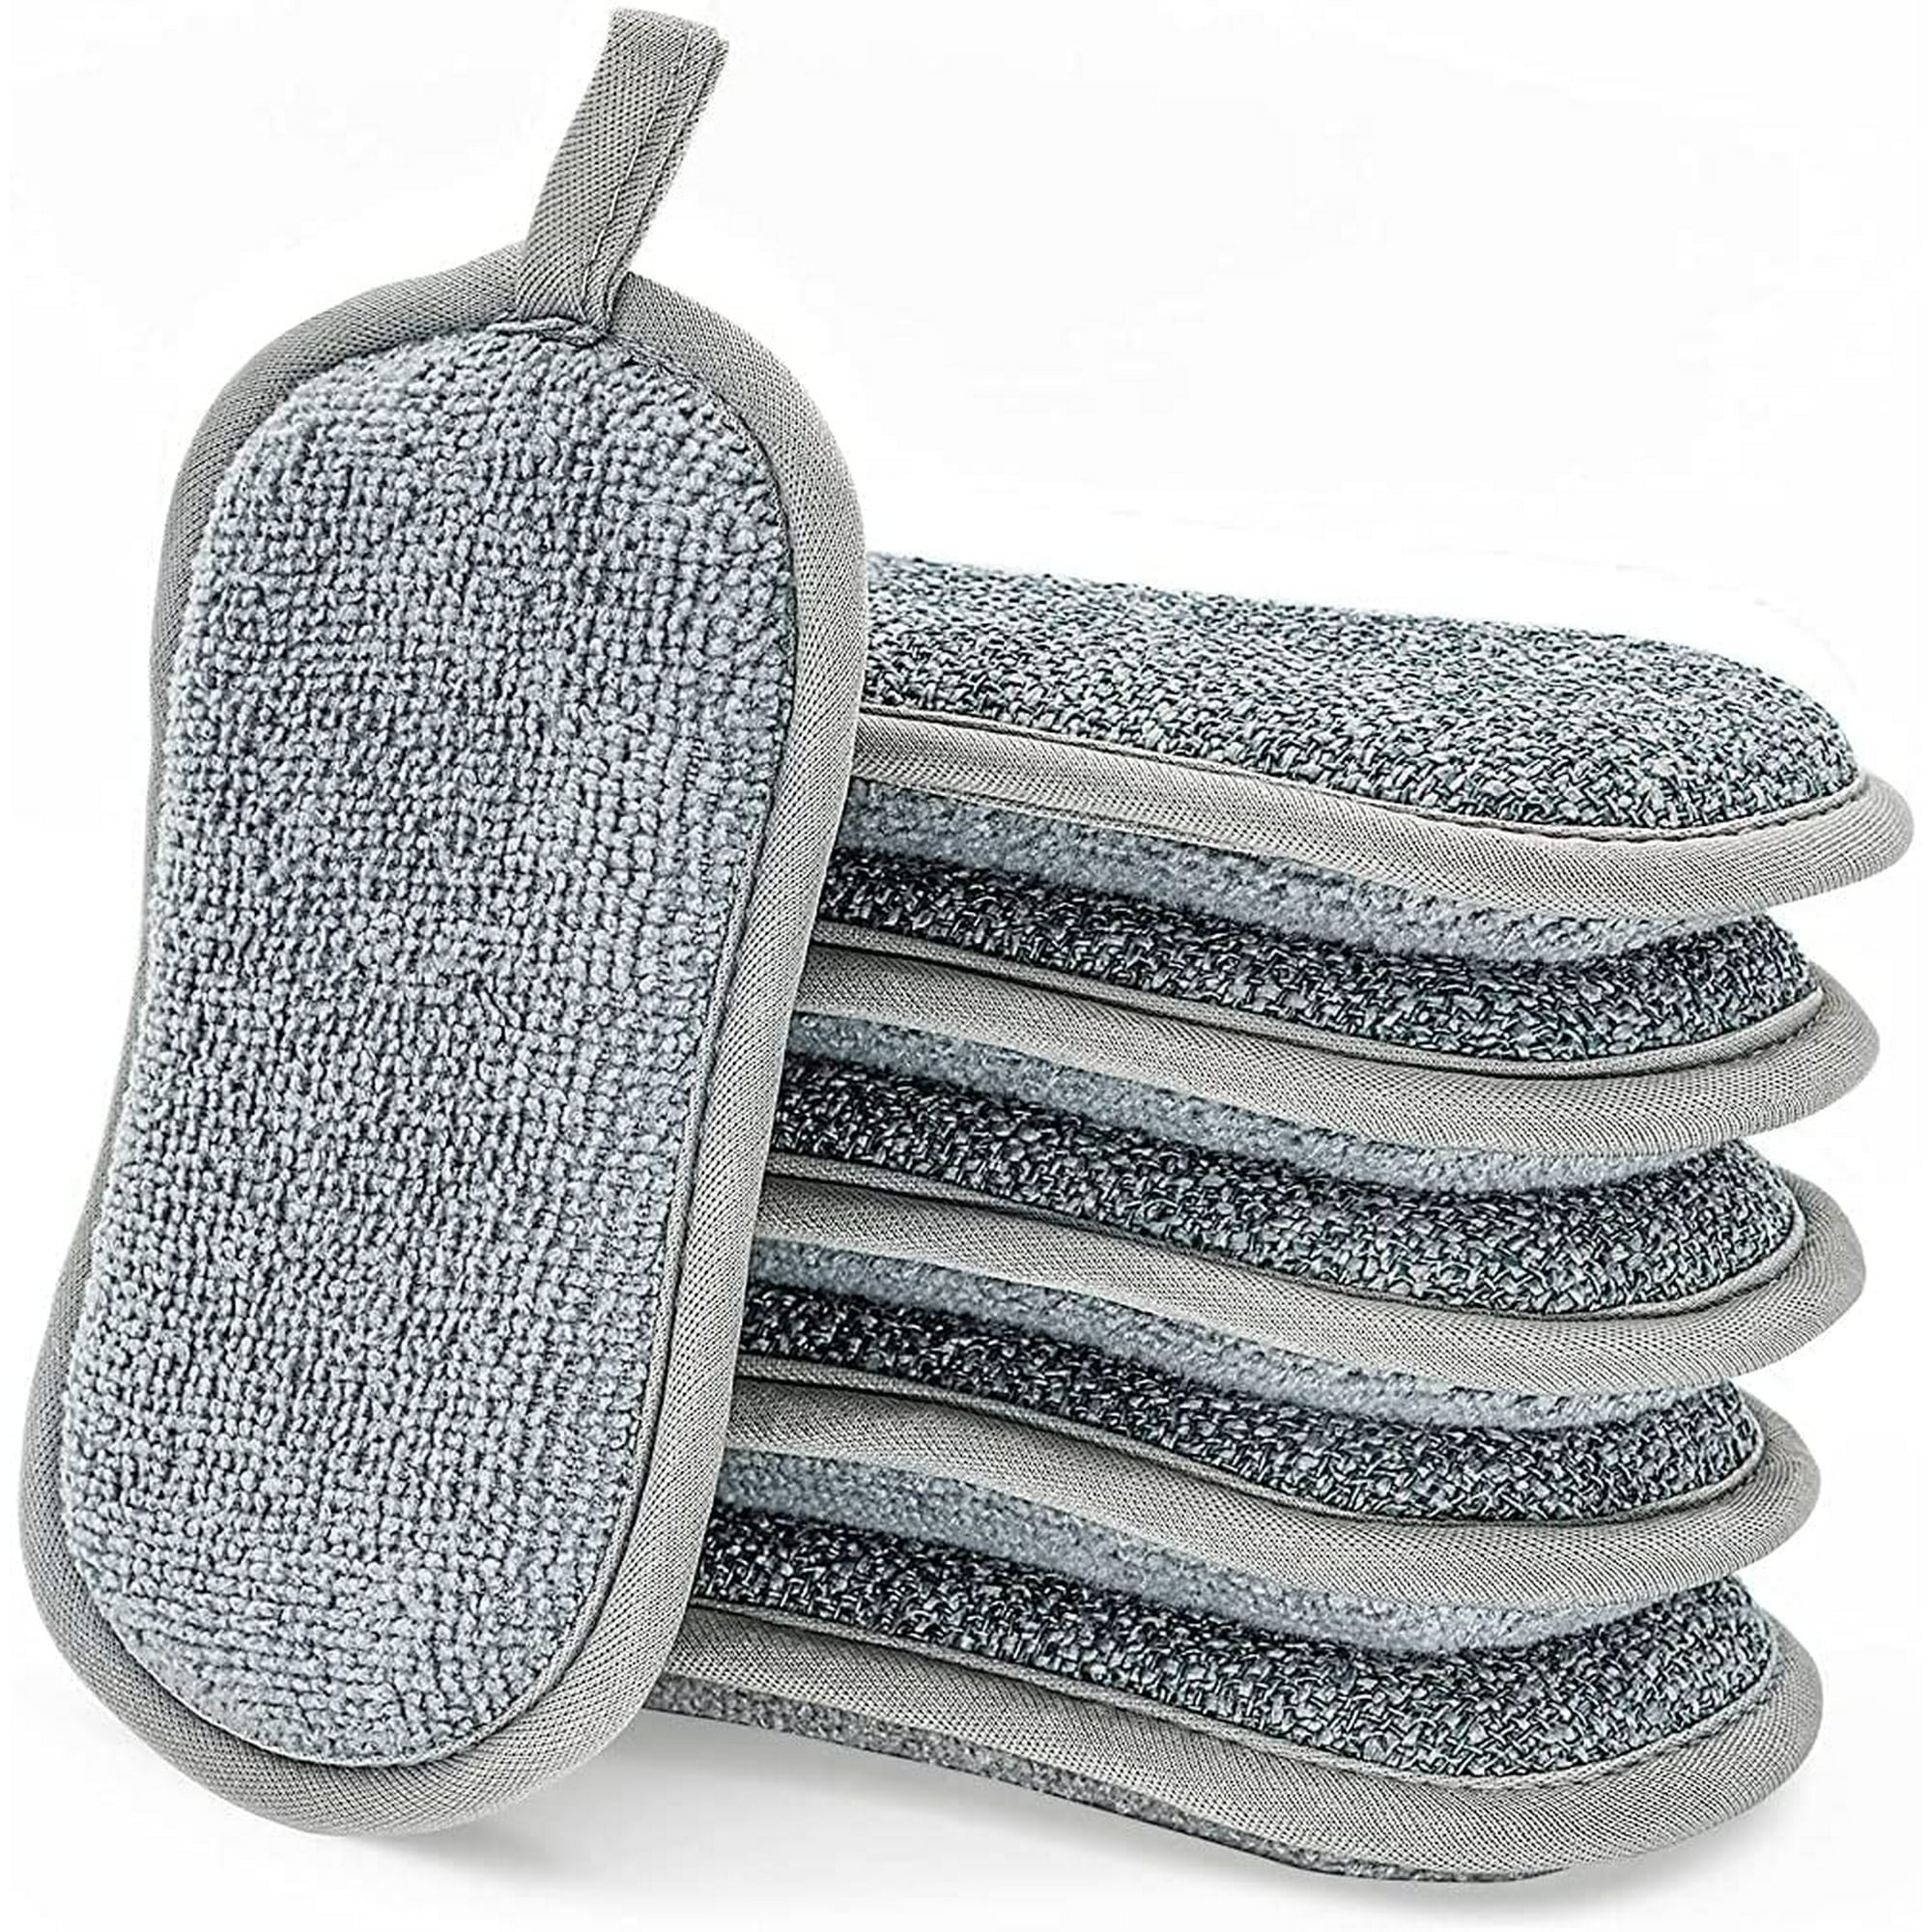 Paquete de 6 esponjas de acero para lavar platos, esponja multiusos  resistente para lavar platos, esponja de cocina de larga duración para